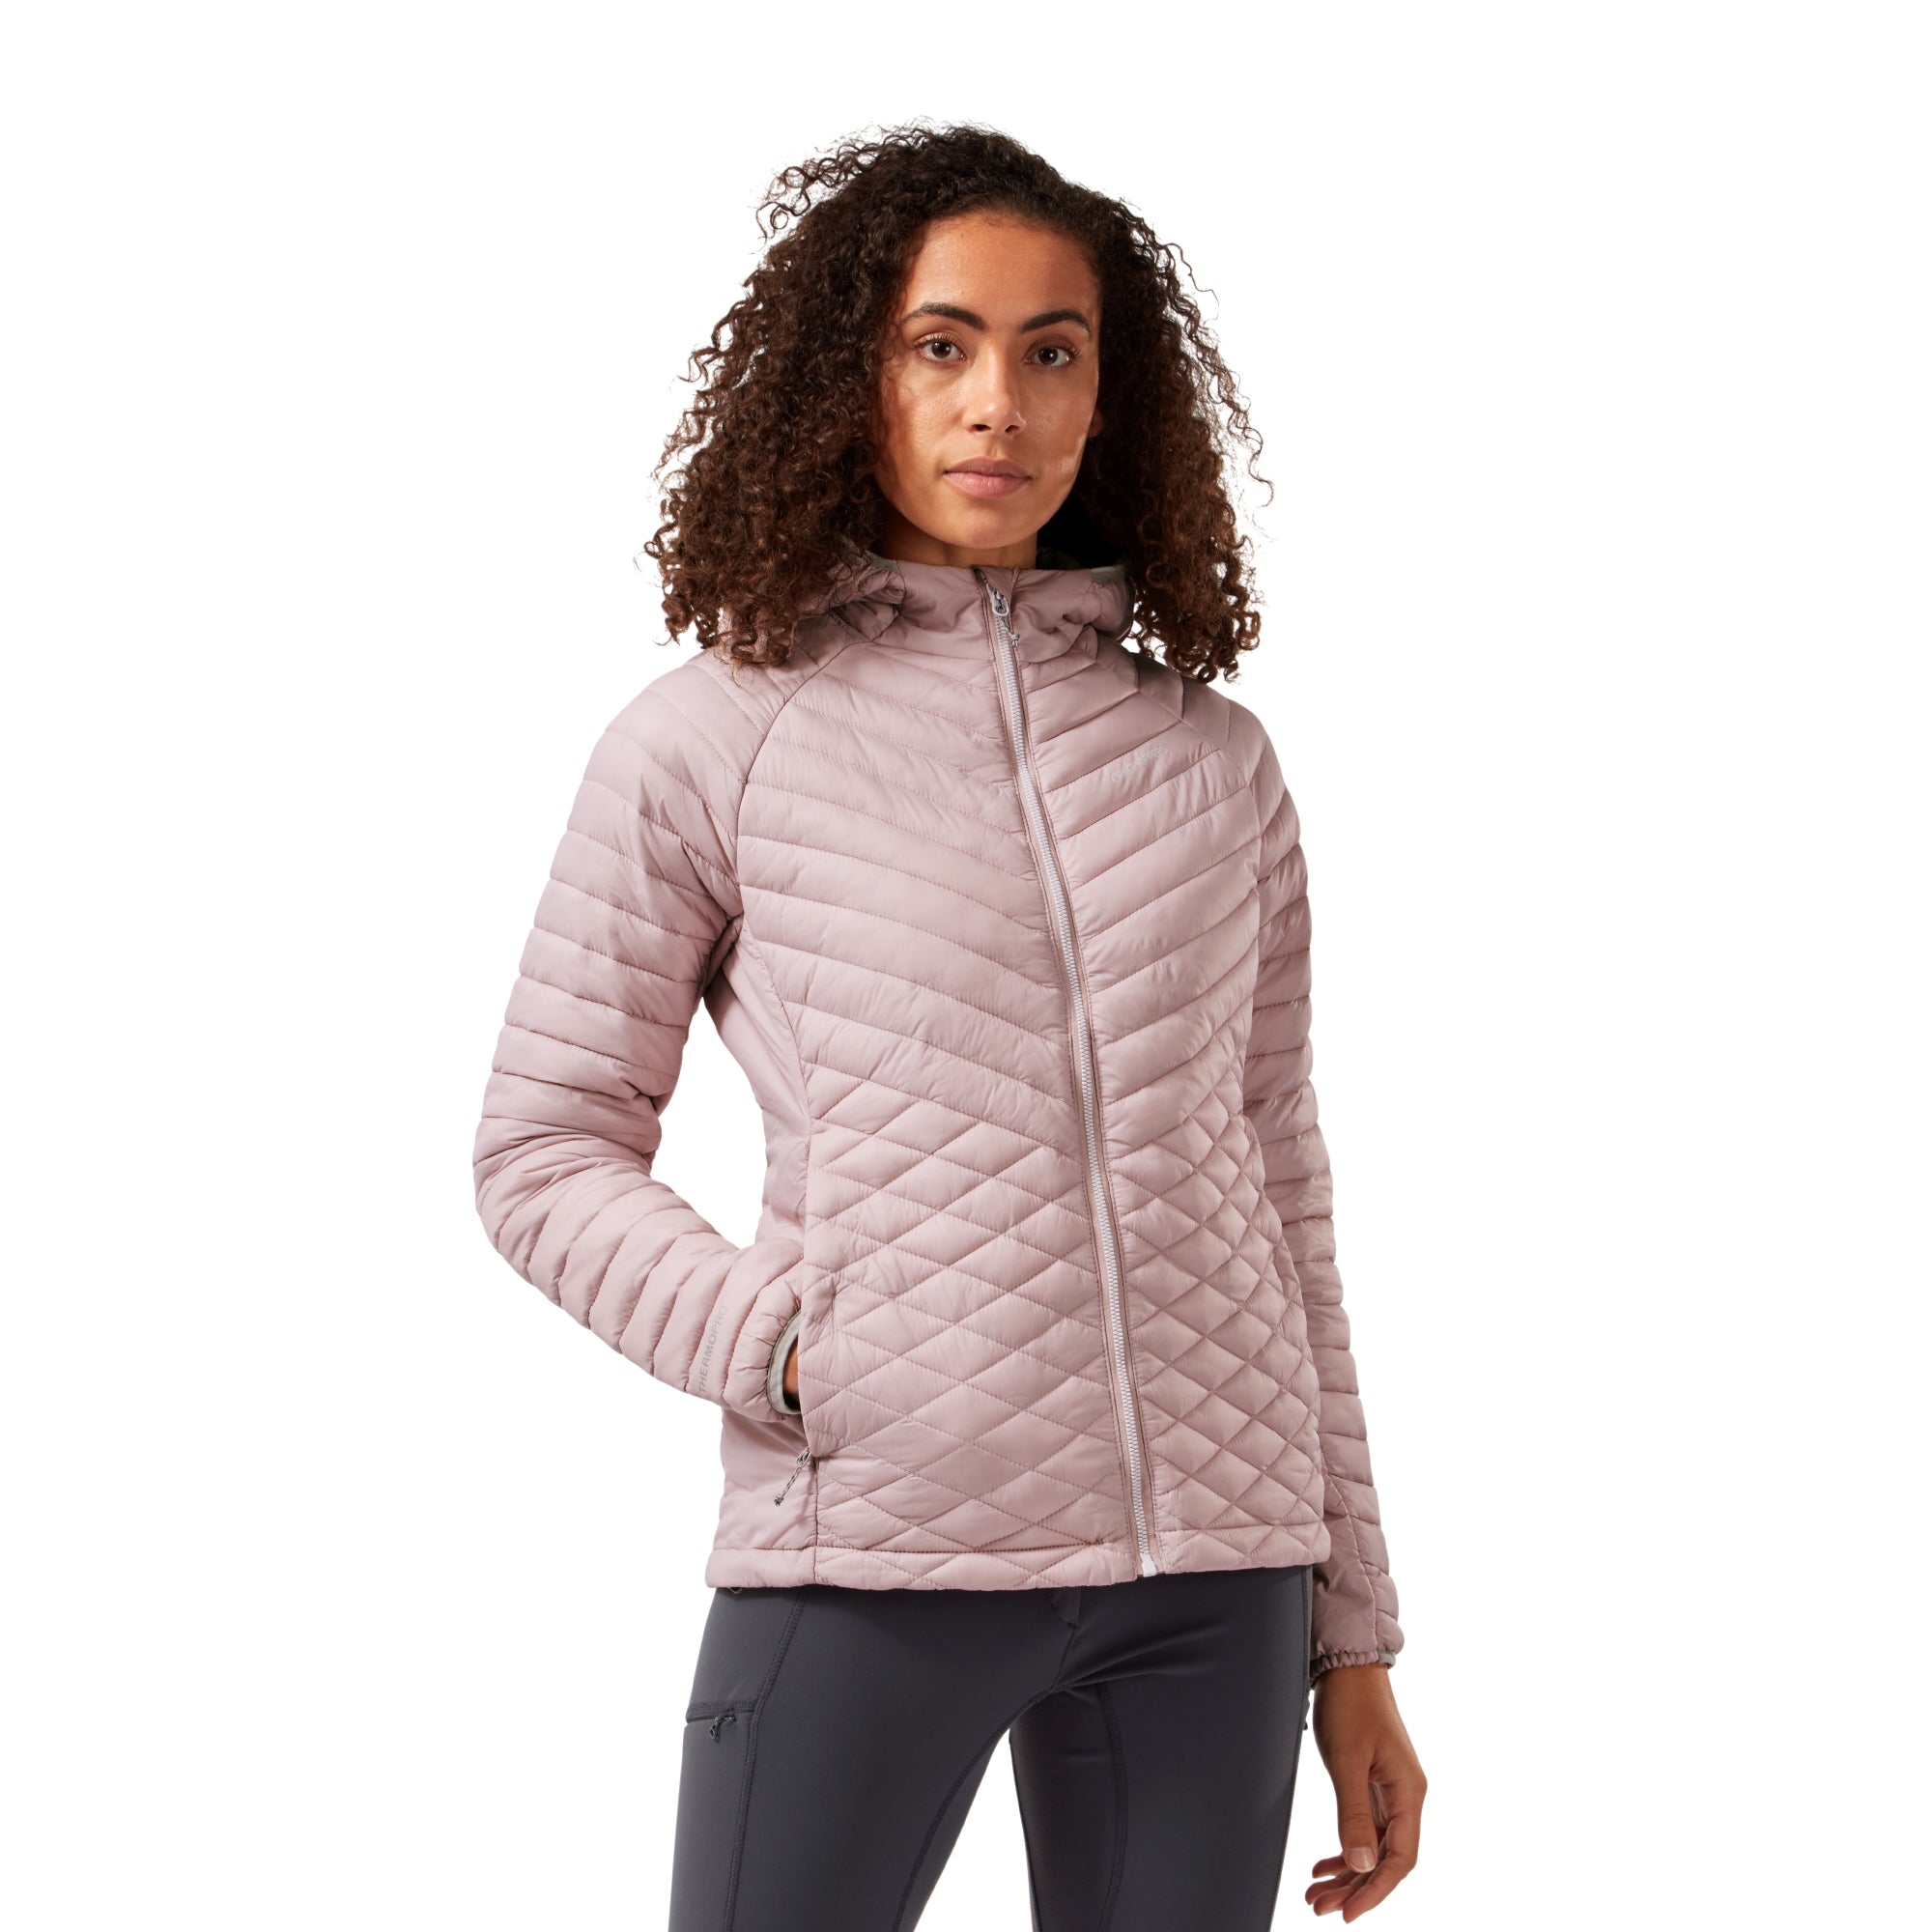 Women's ExpoLite Hooded Jacket | Brushed Lilac